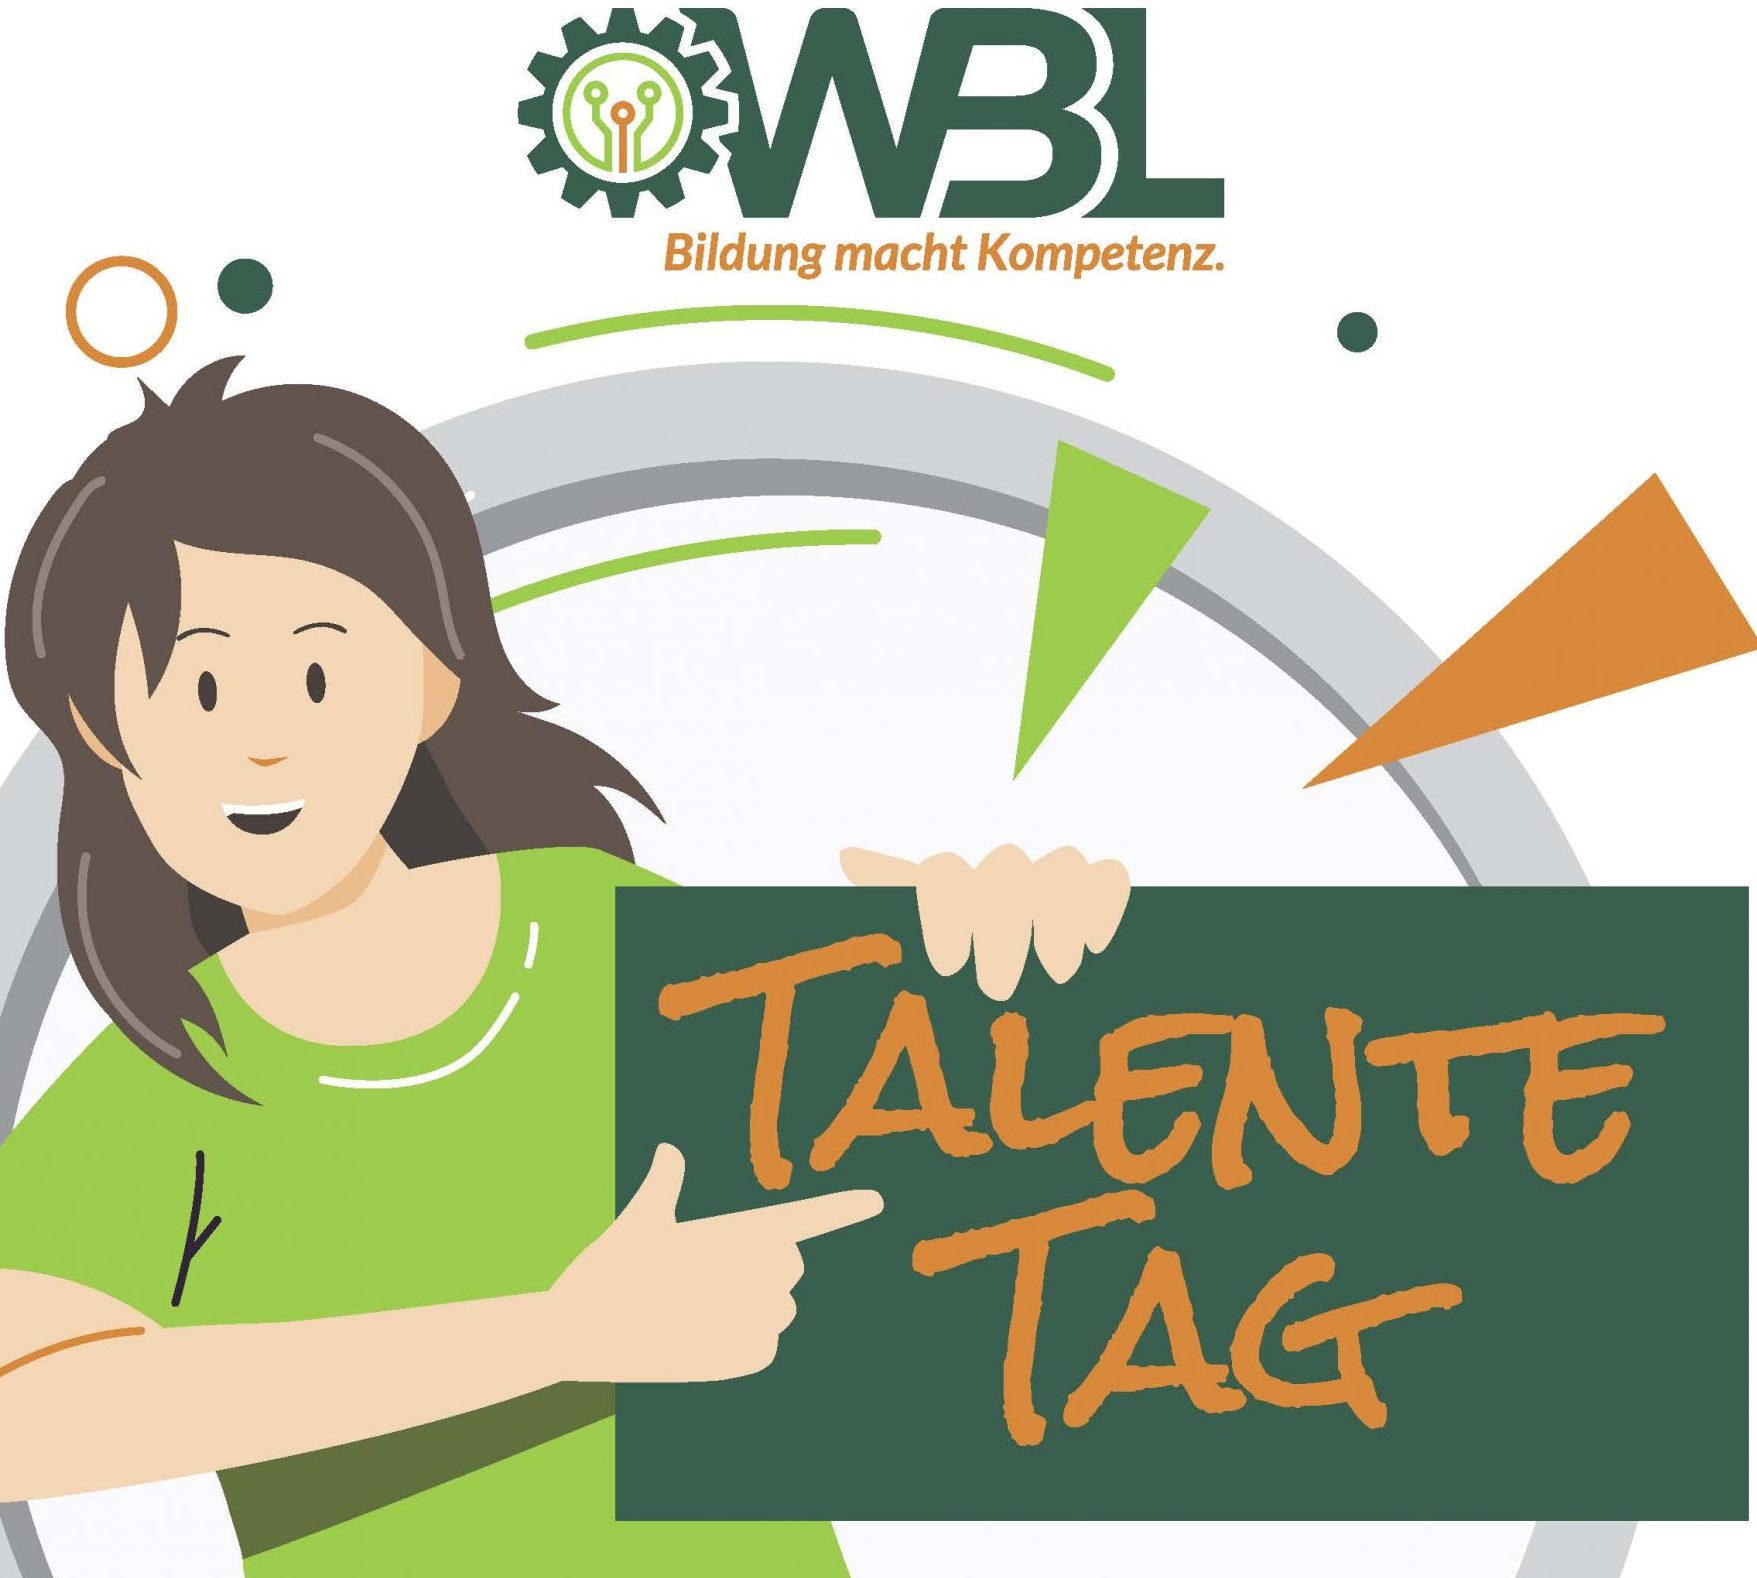 WBL Talente Tag – Tag der offenen Tür